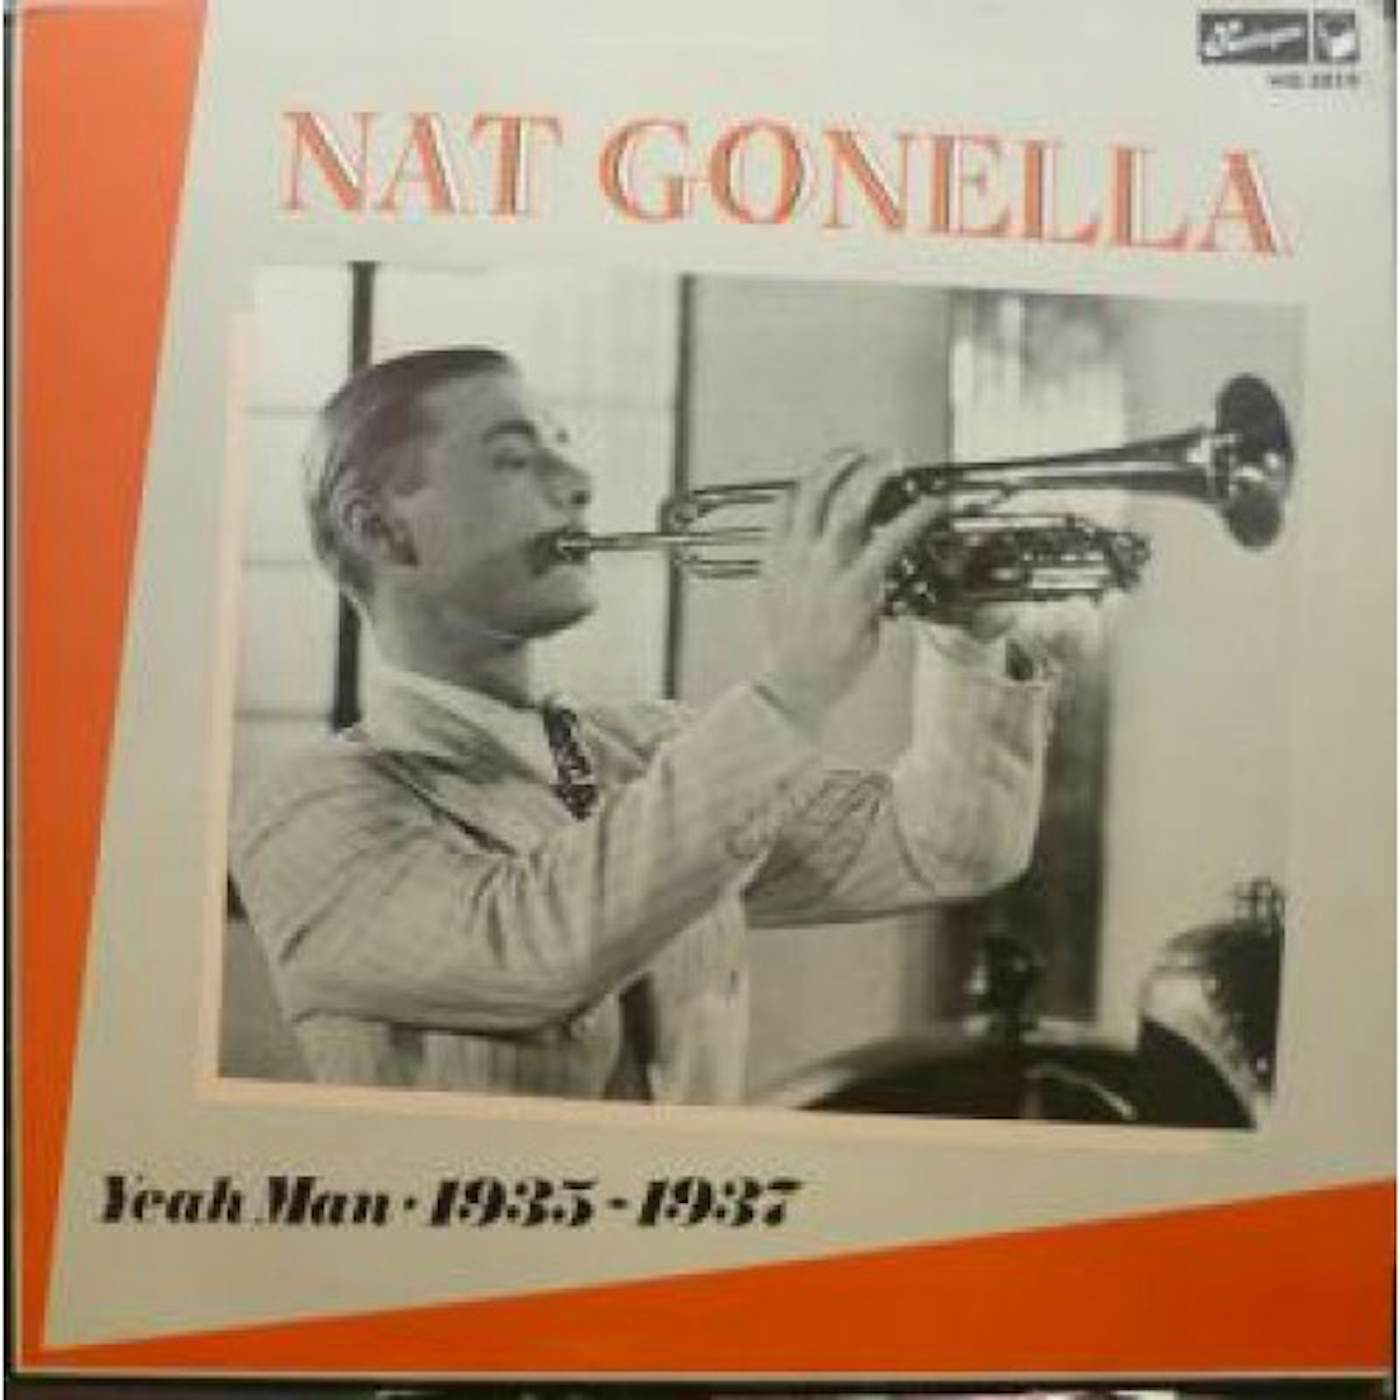 Nat Gonella YEAH MAN: 1935 - 1937 Vinyl Record